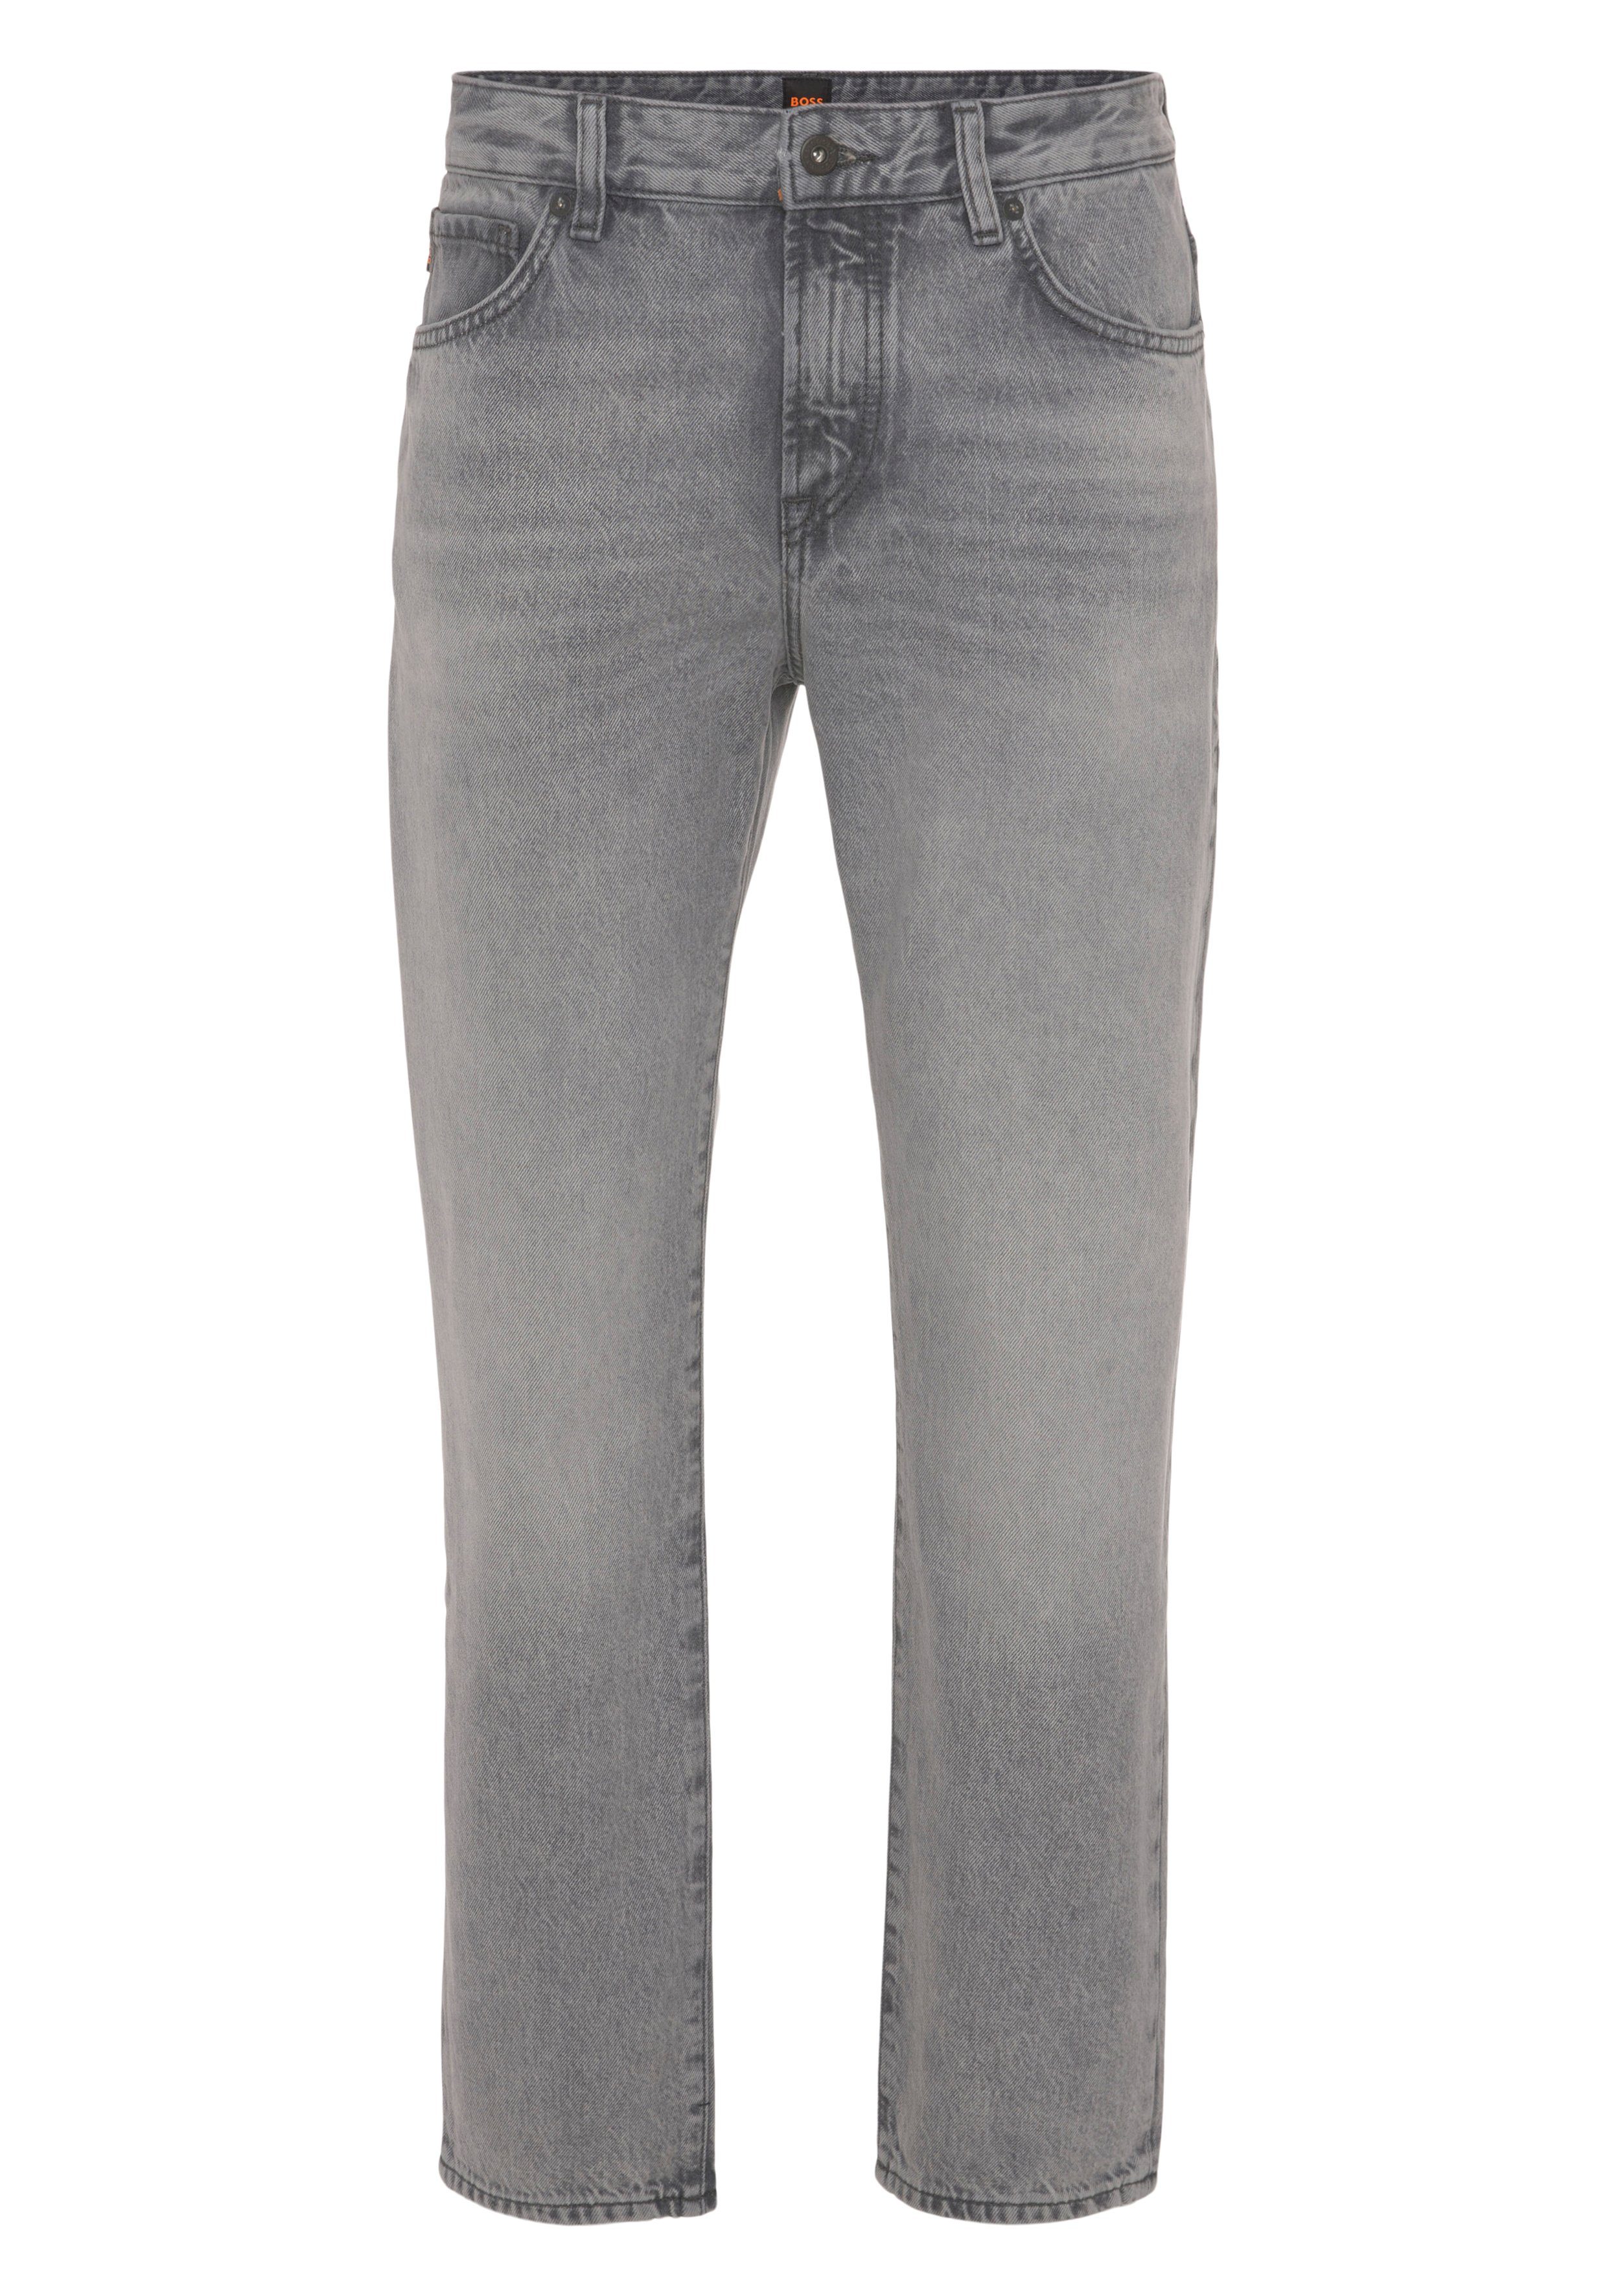 BOSS ORANGE Gerade Jeans mit Leder-Badge pastellgrau3